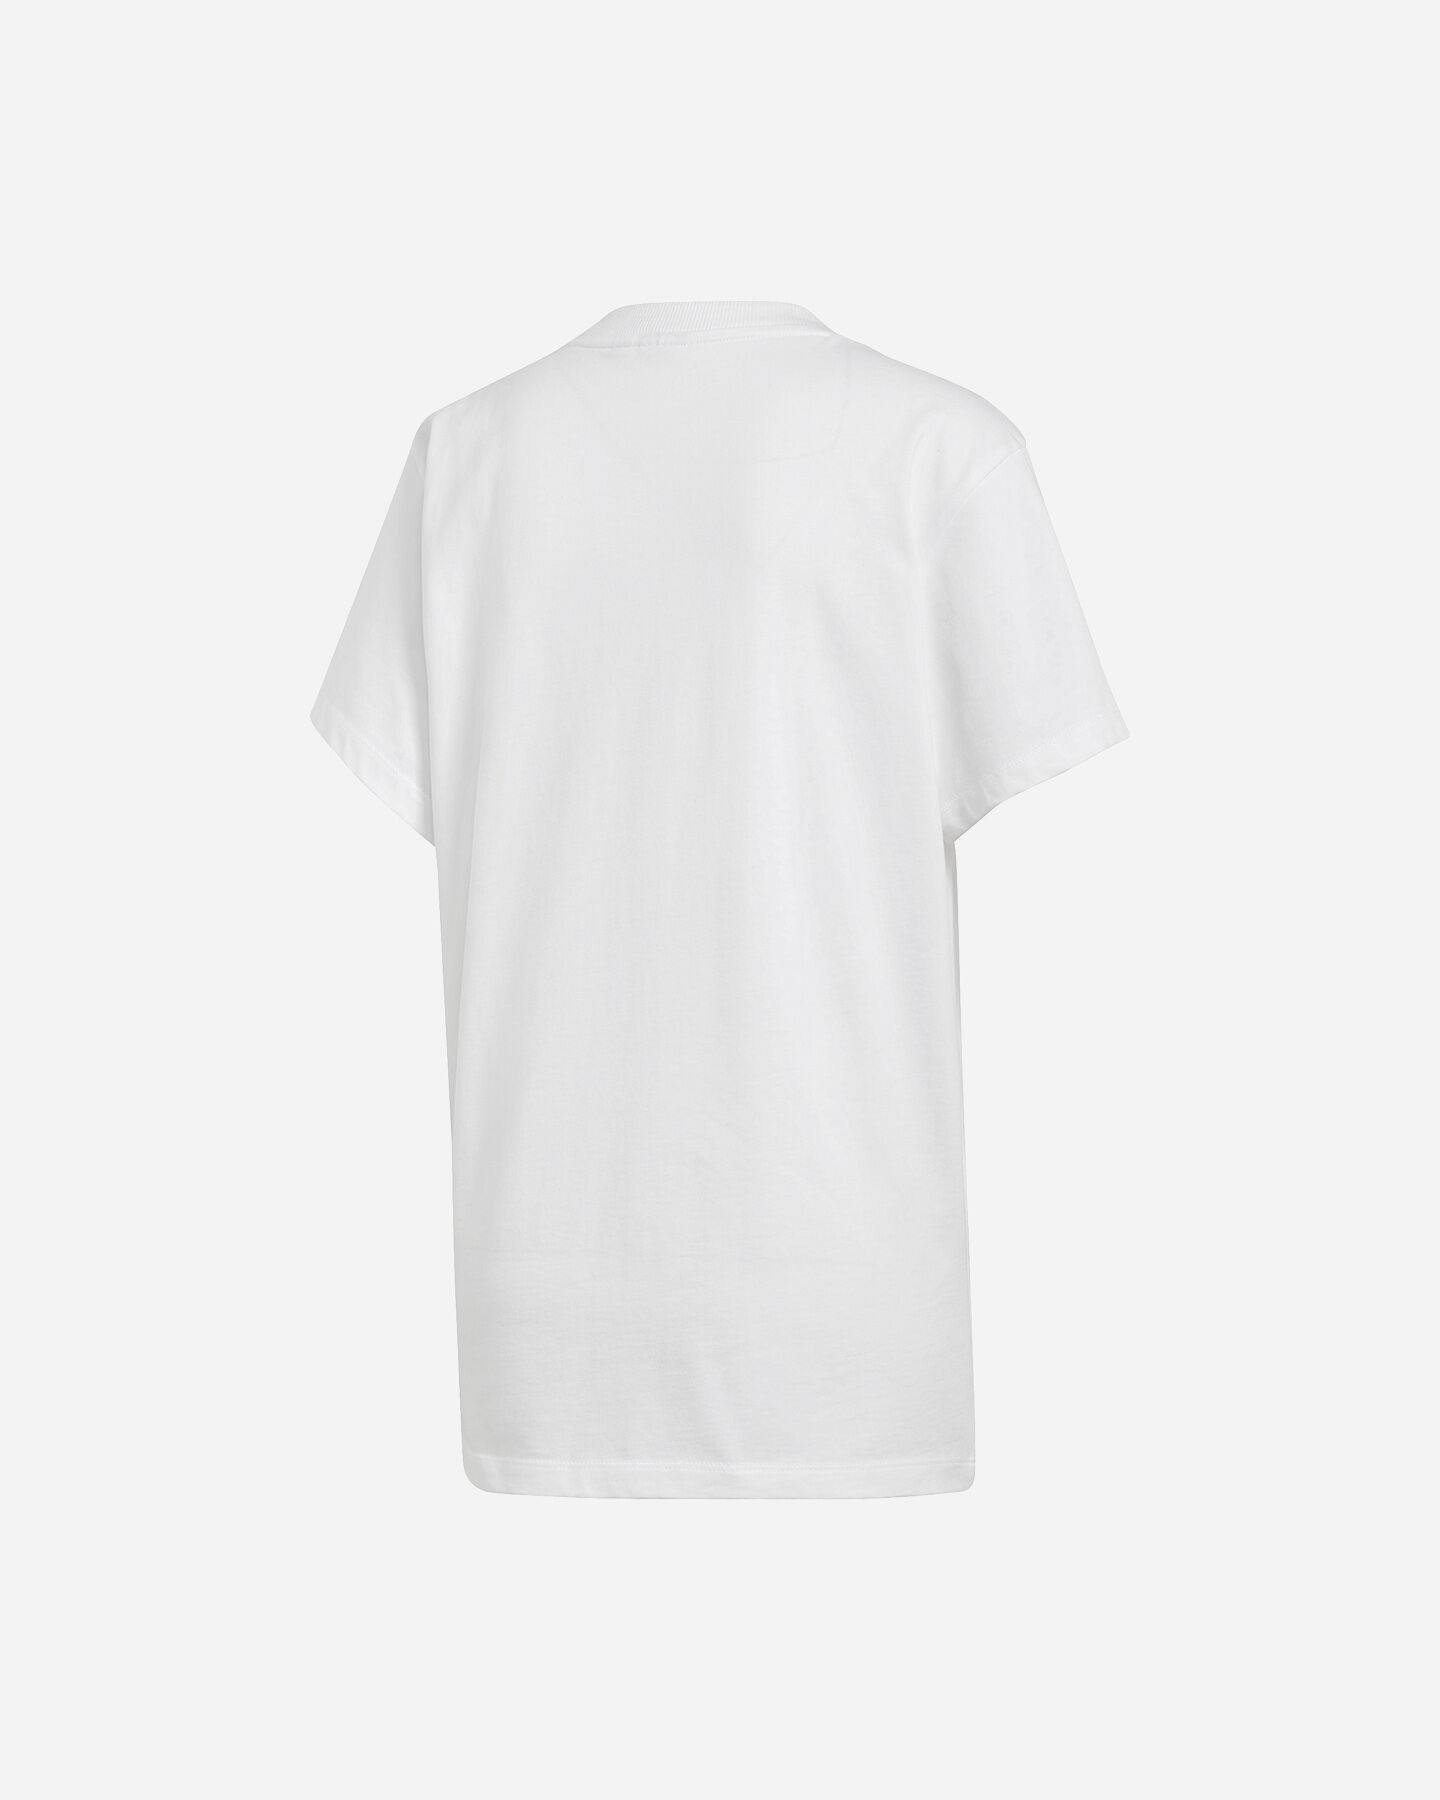  T-Shirt ADIDAS BOYFRIEND TREFOIL W S2013744|UNI|38 scatto 1